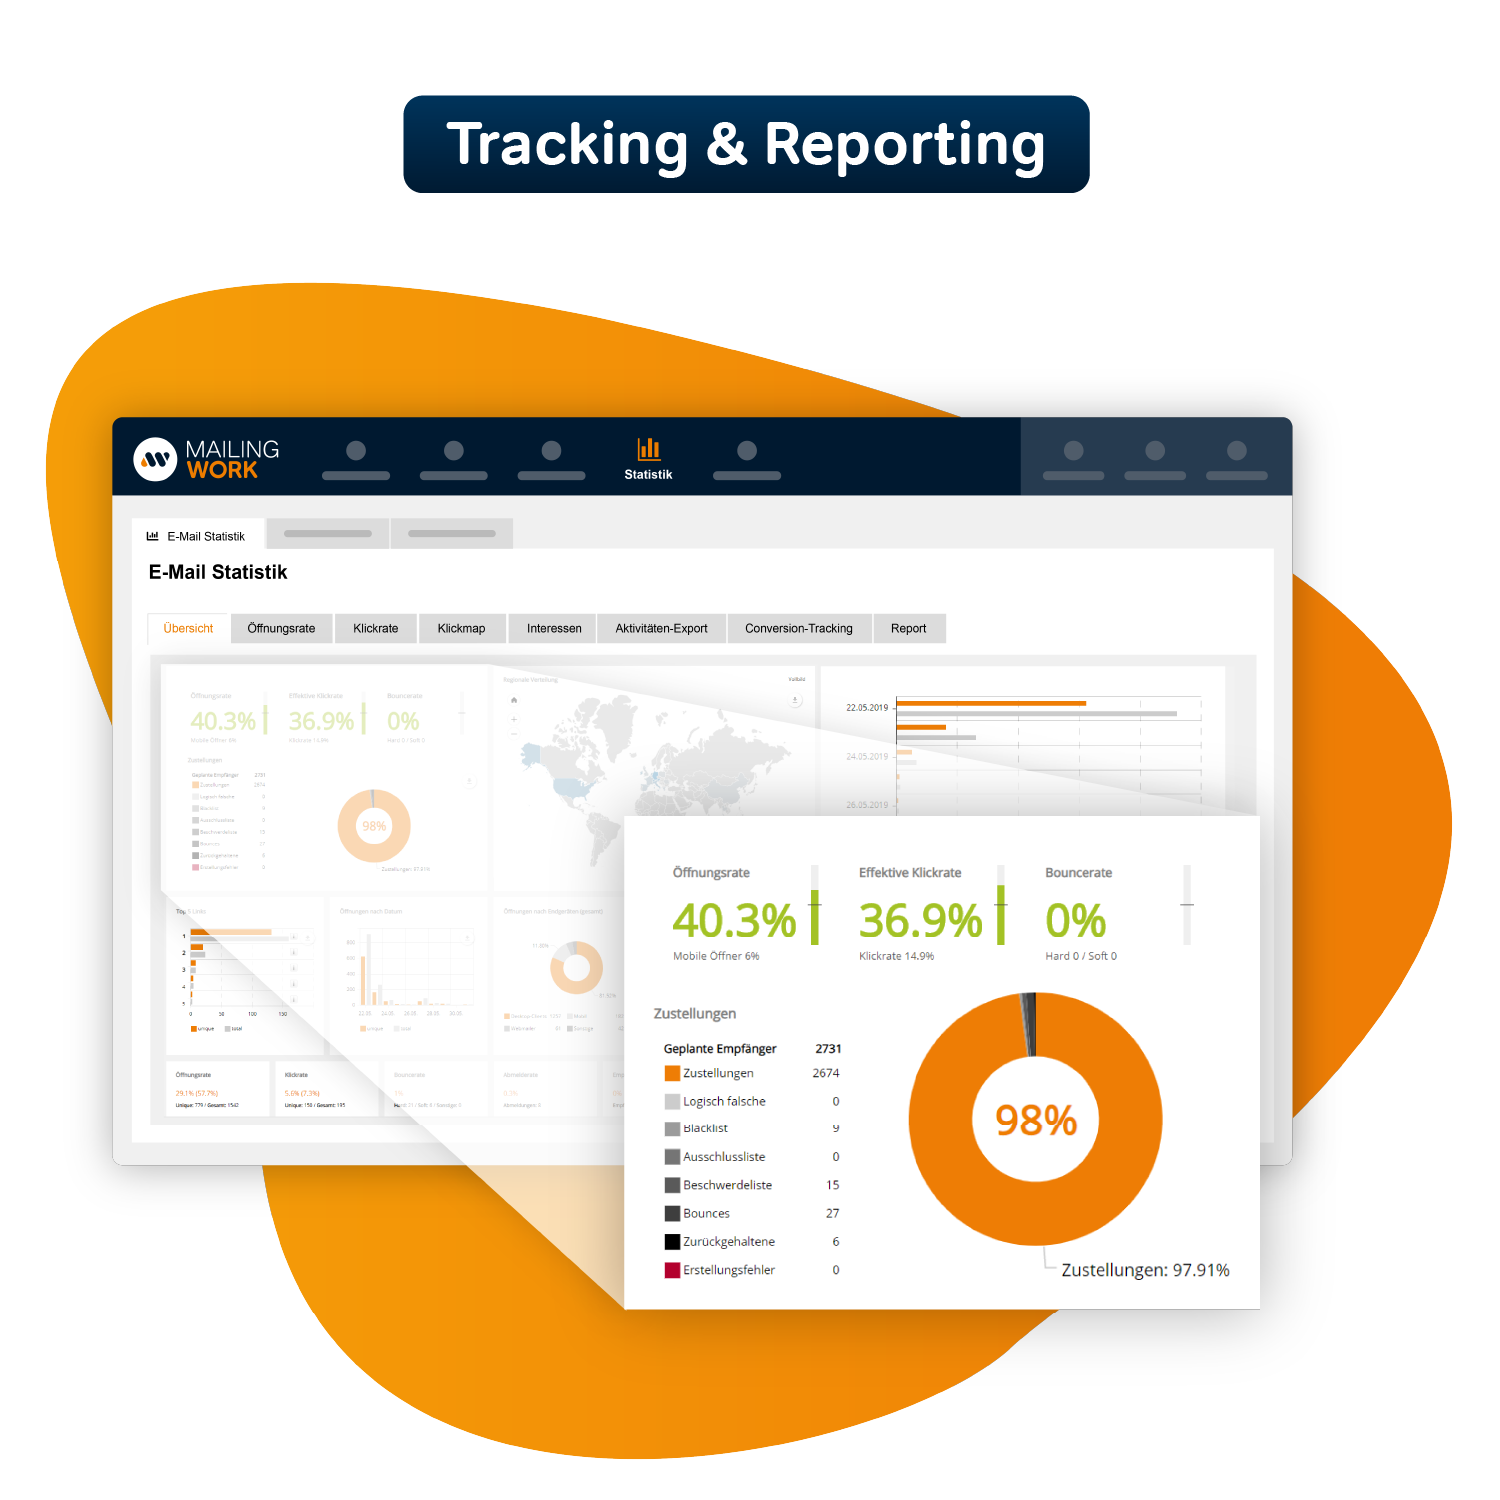 Tracking & Reporting
Transparent tracking - Keep an eye on success

Tracking & Reporting
Transparentes Tracking – Den Erfolg im Blick